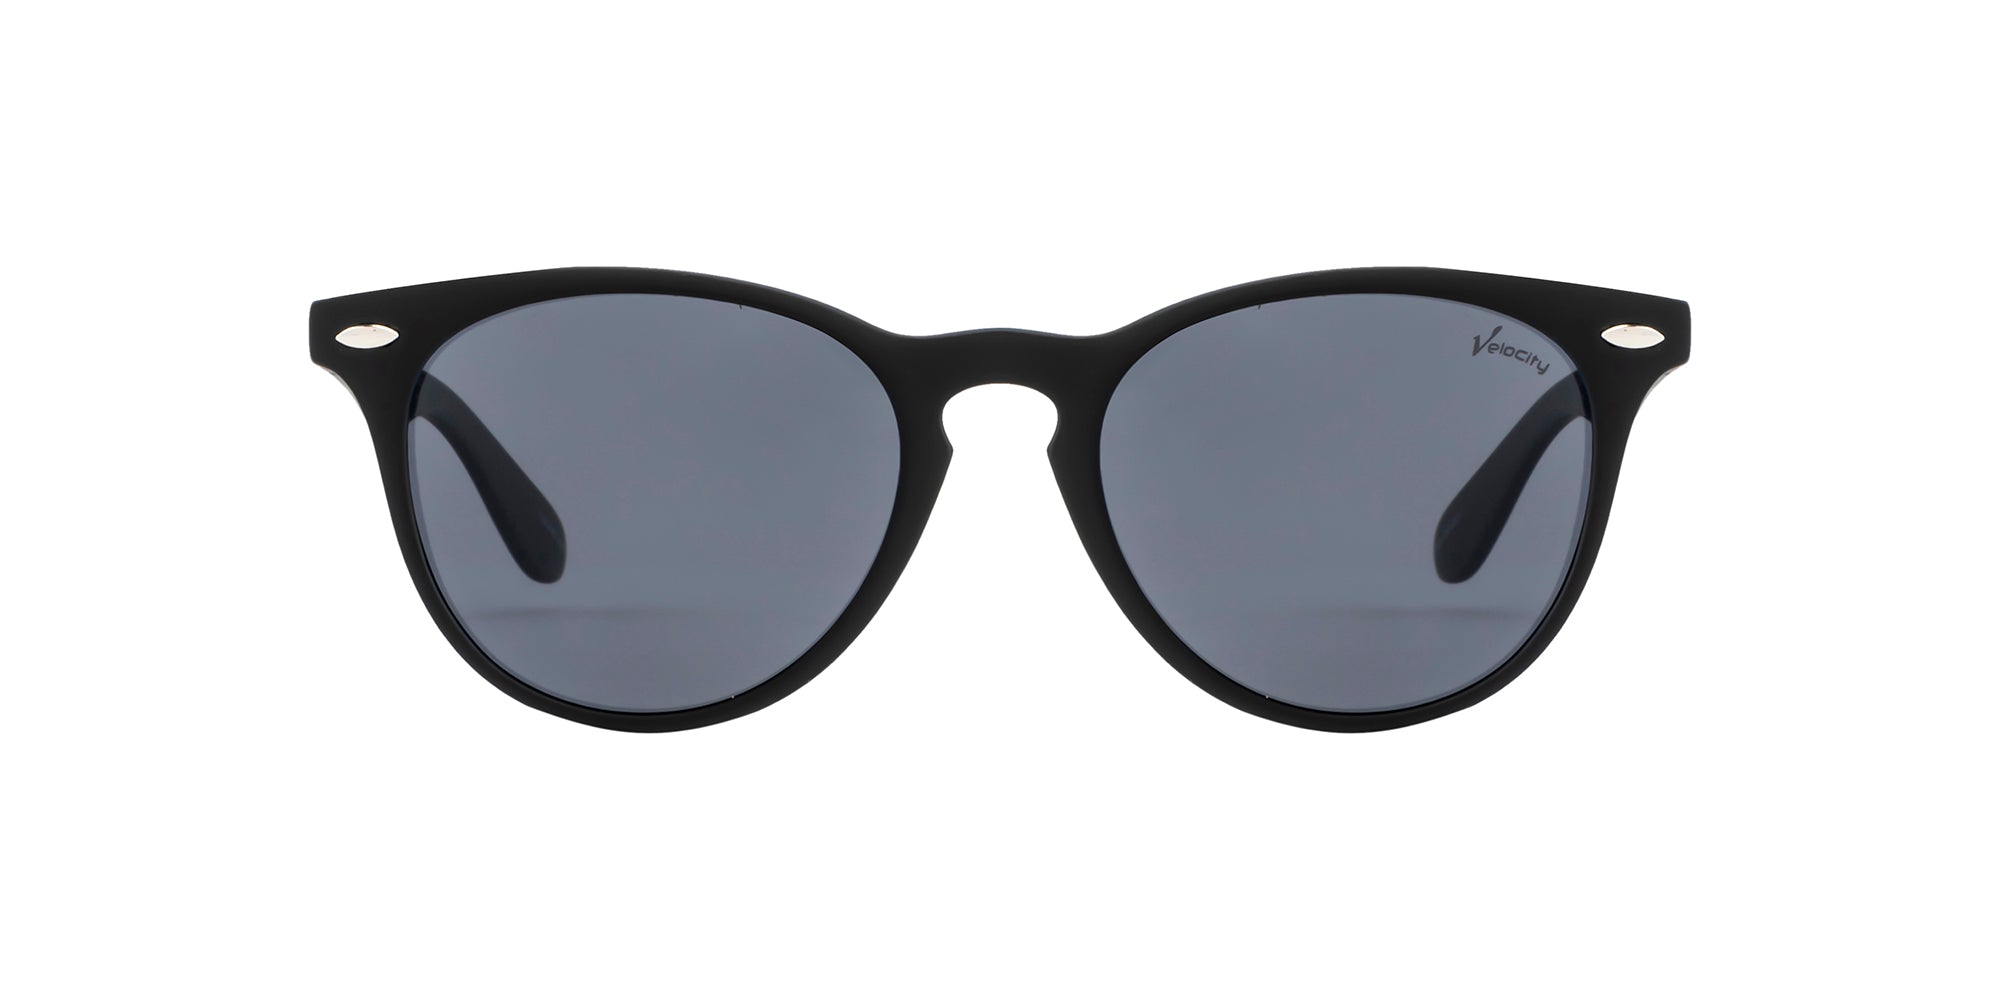 Velocity Sunglasses 1959 Black Oval Sunglass